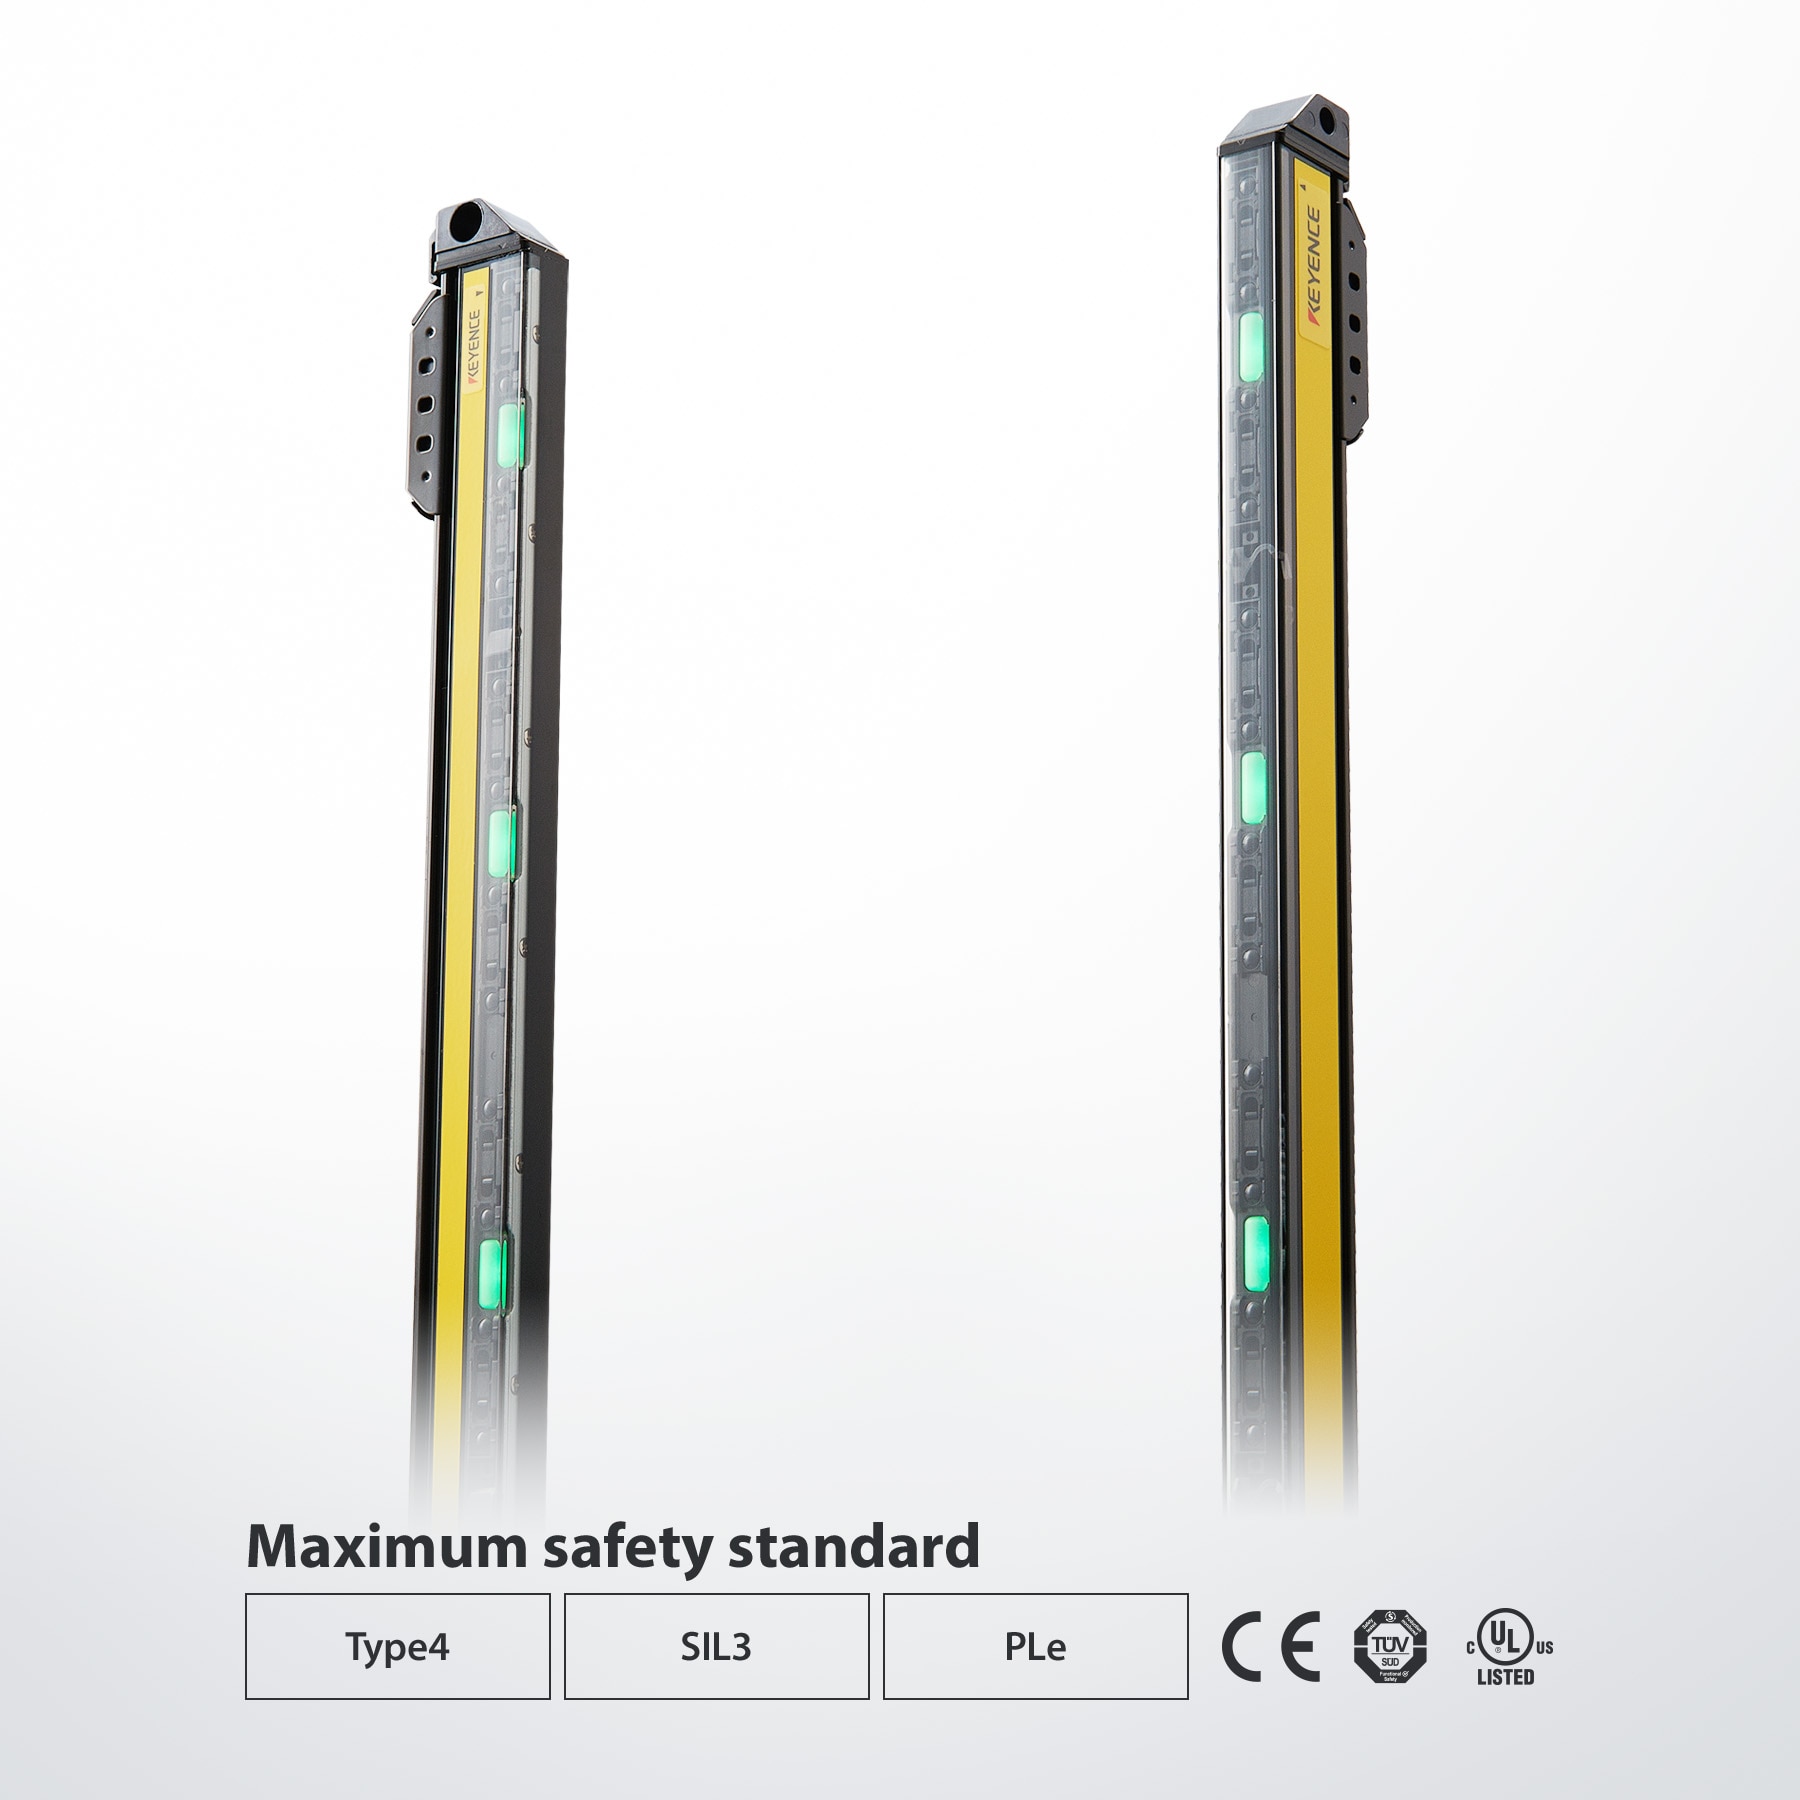 Maximum safety standard. Type4 / SIL3 / PLe